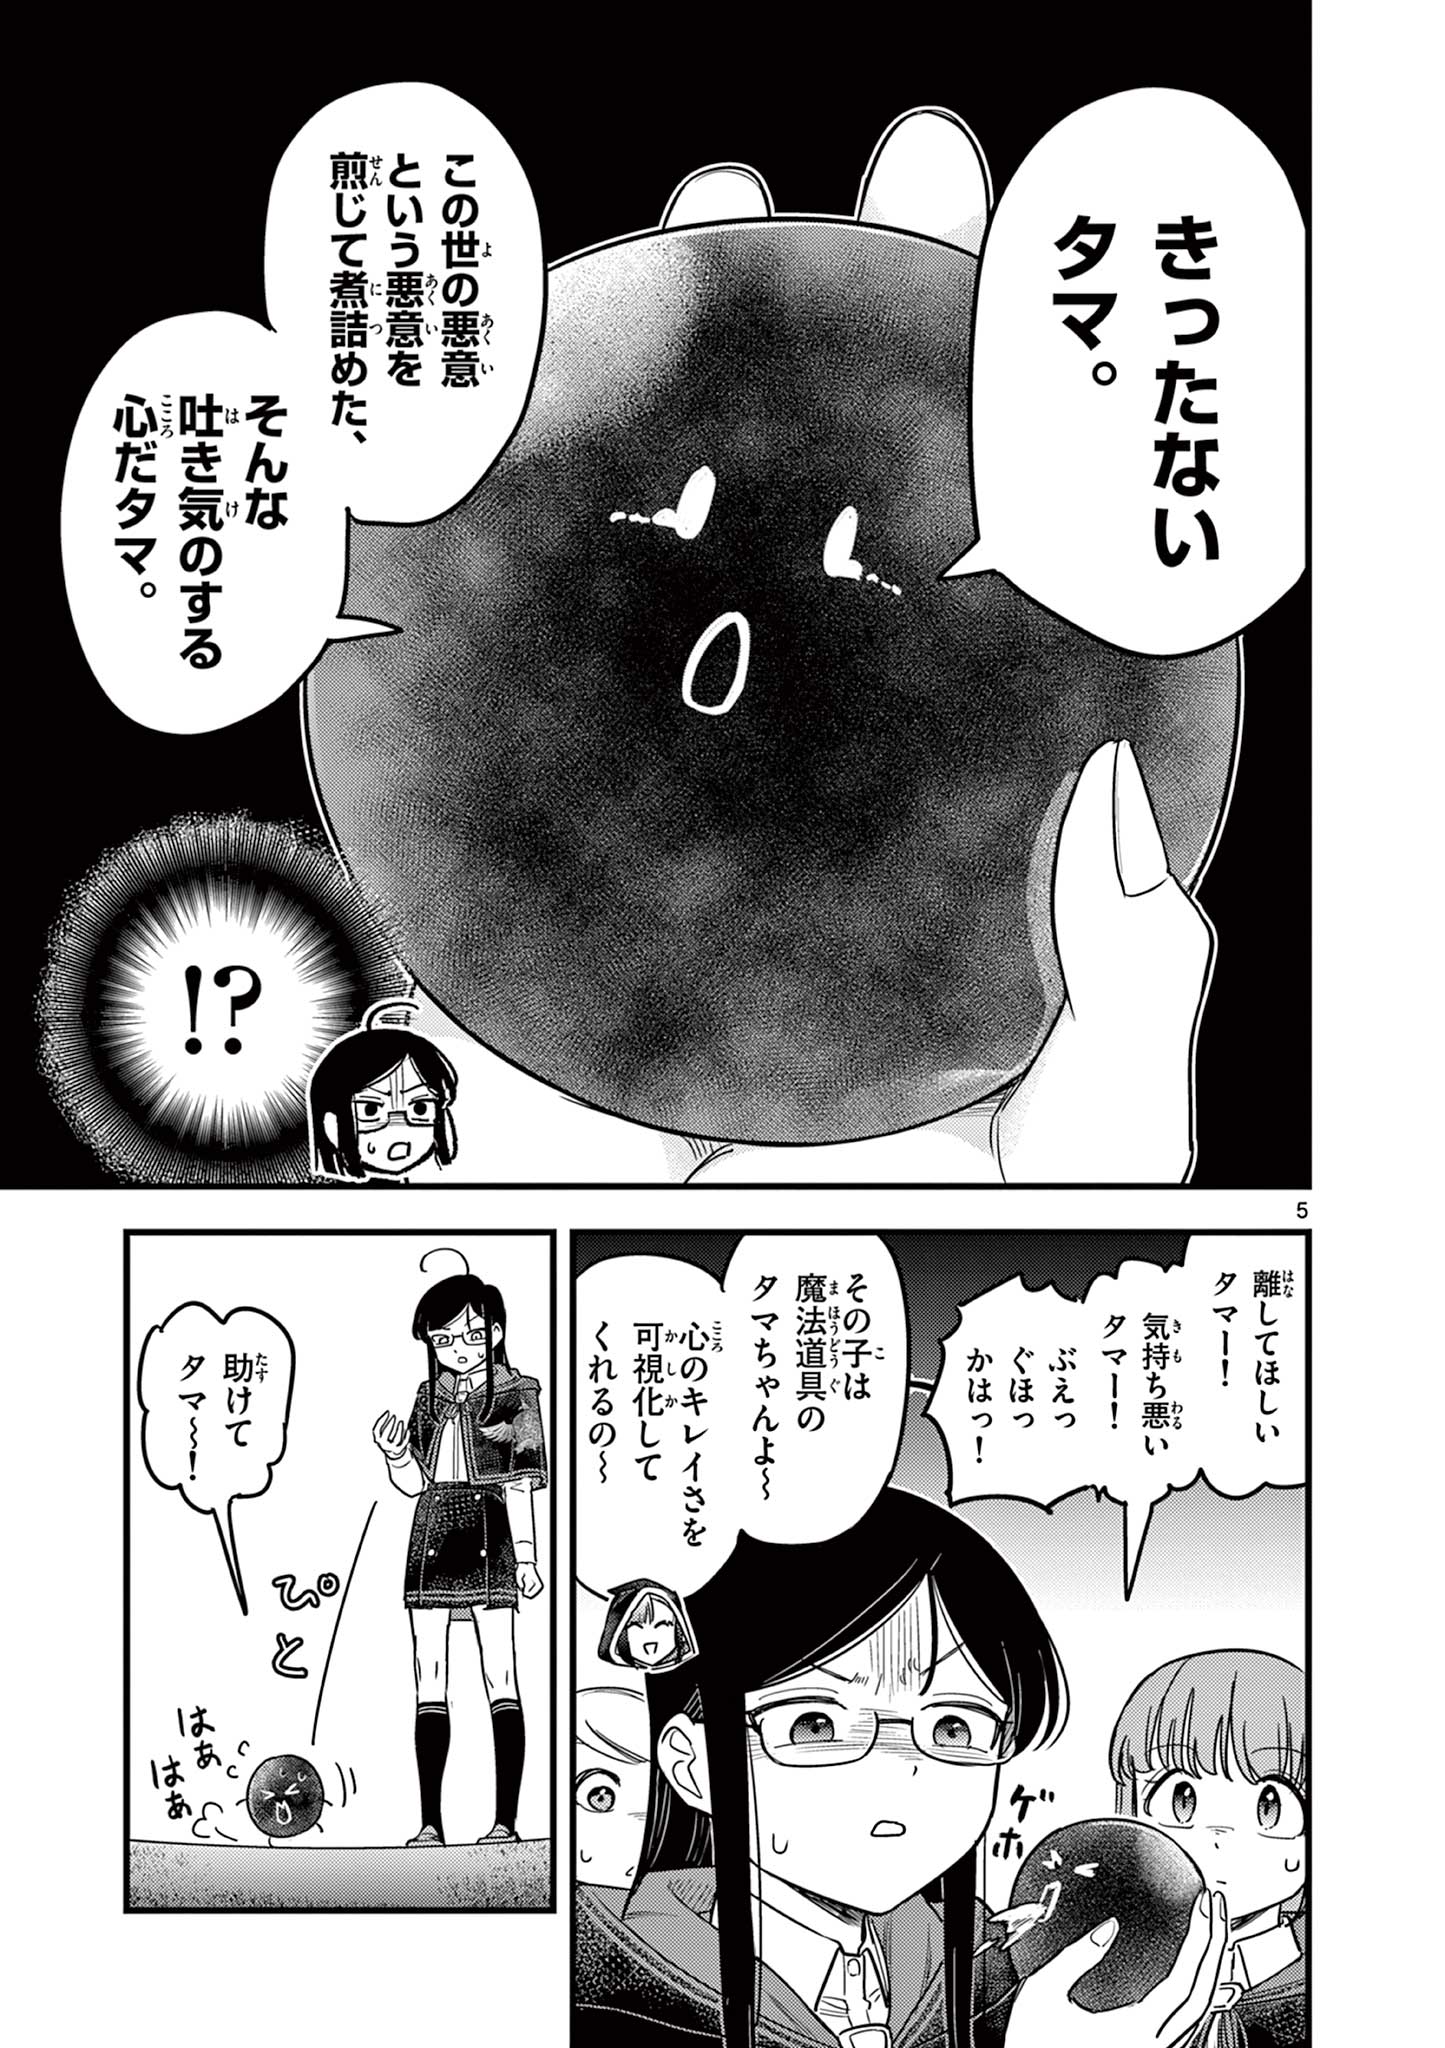 Kuro Mahou Ryou no Sanakunin - Chapter 10 - Page 5